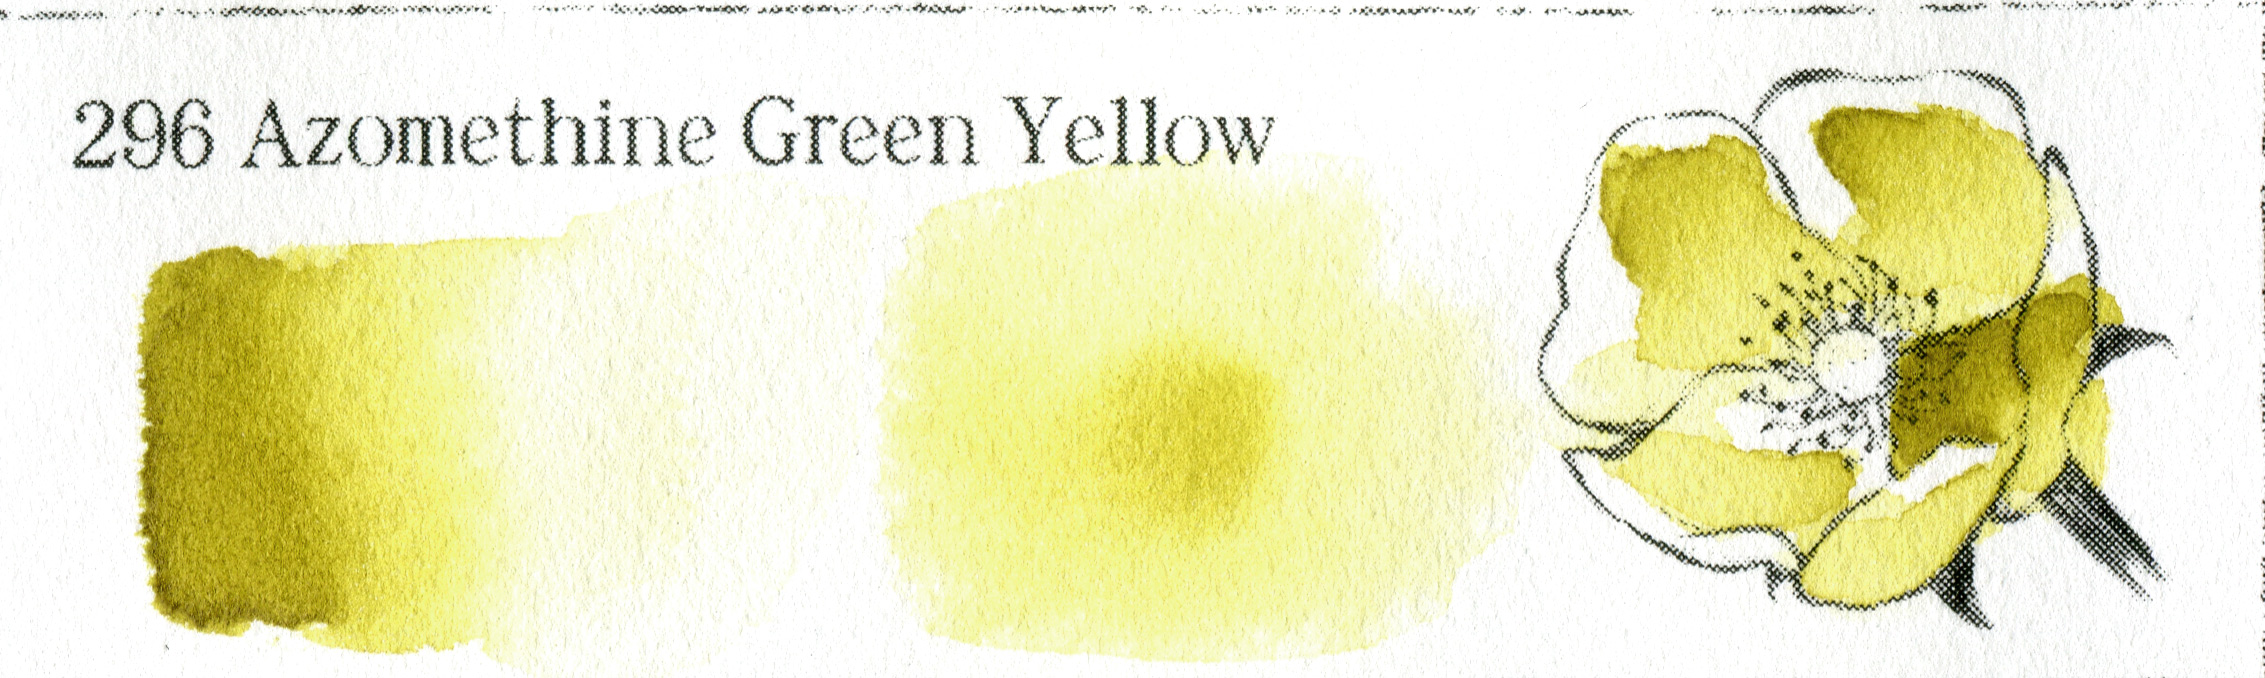 296 Azomethine Green Yellow